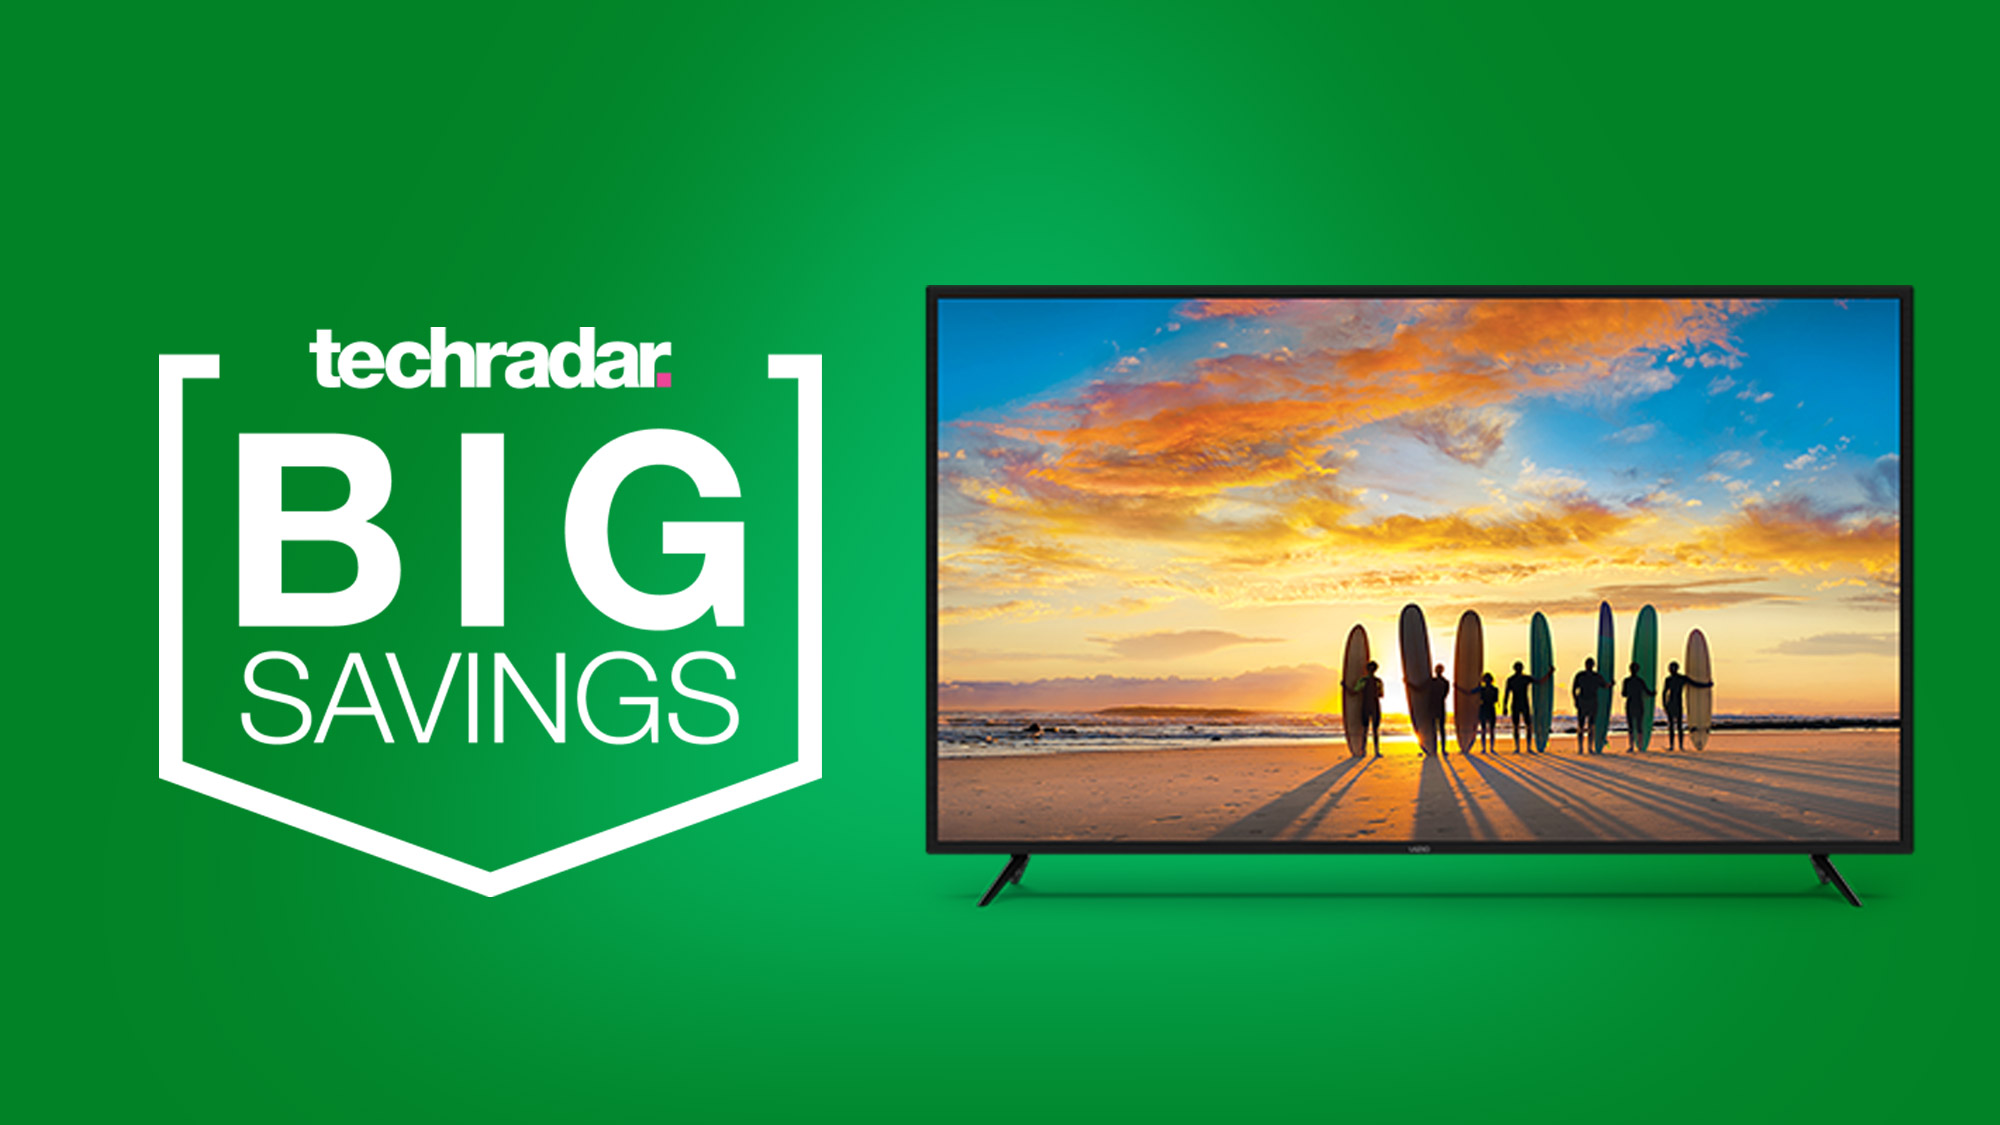 vereist verhoging inspanning Cheap TV deal! This 70-inch 4K TV drops to just $588 at Walmart | TechRadar